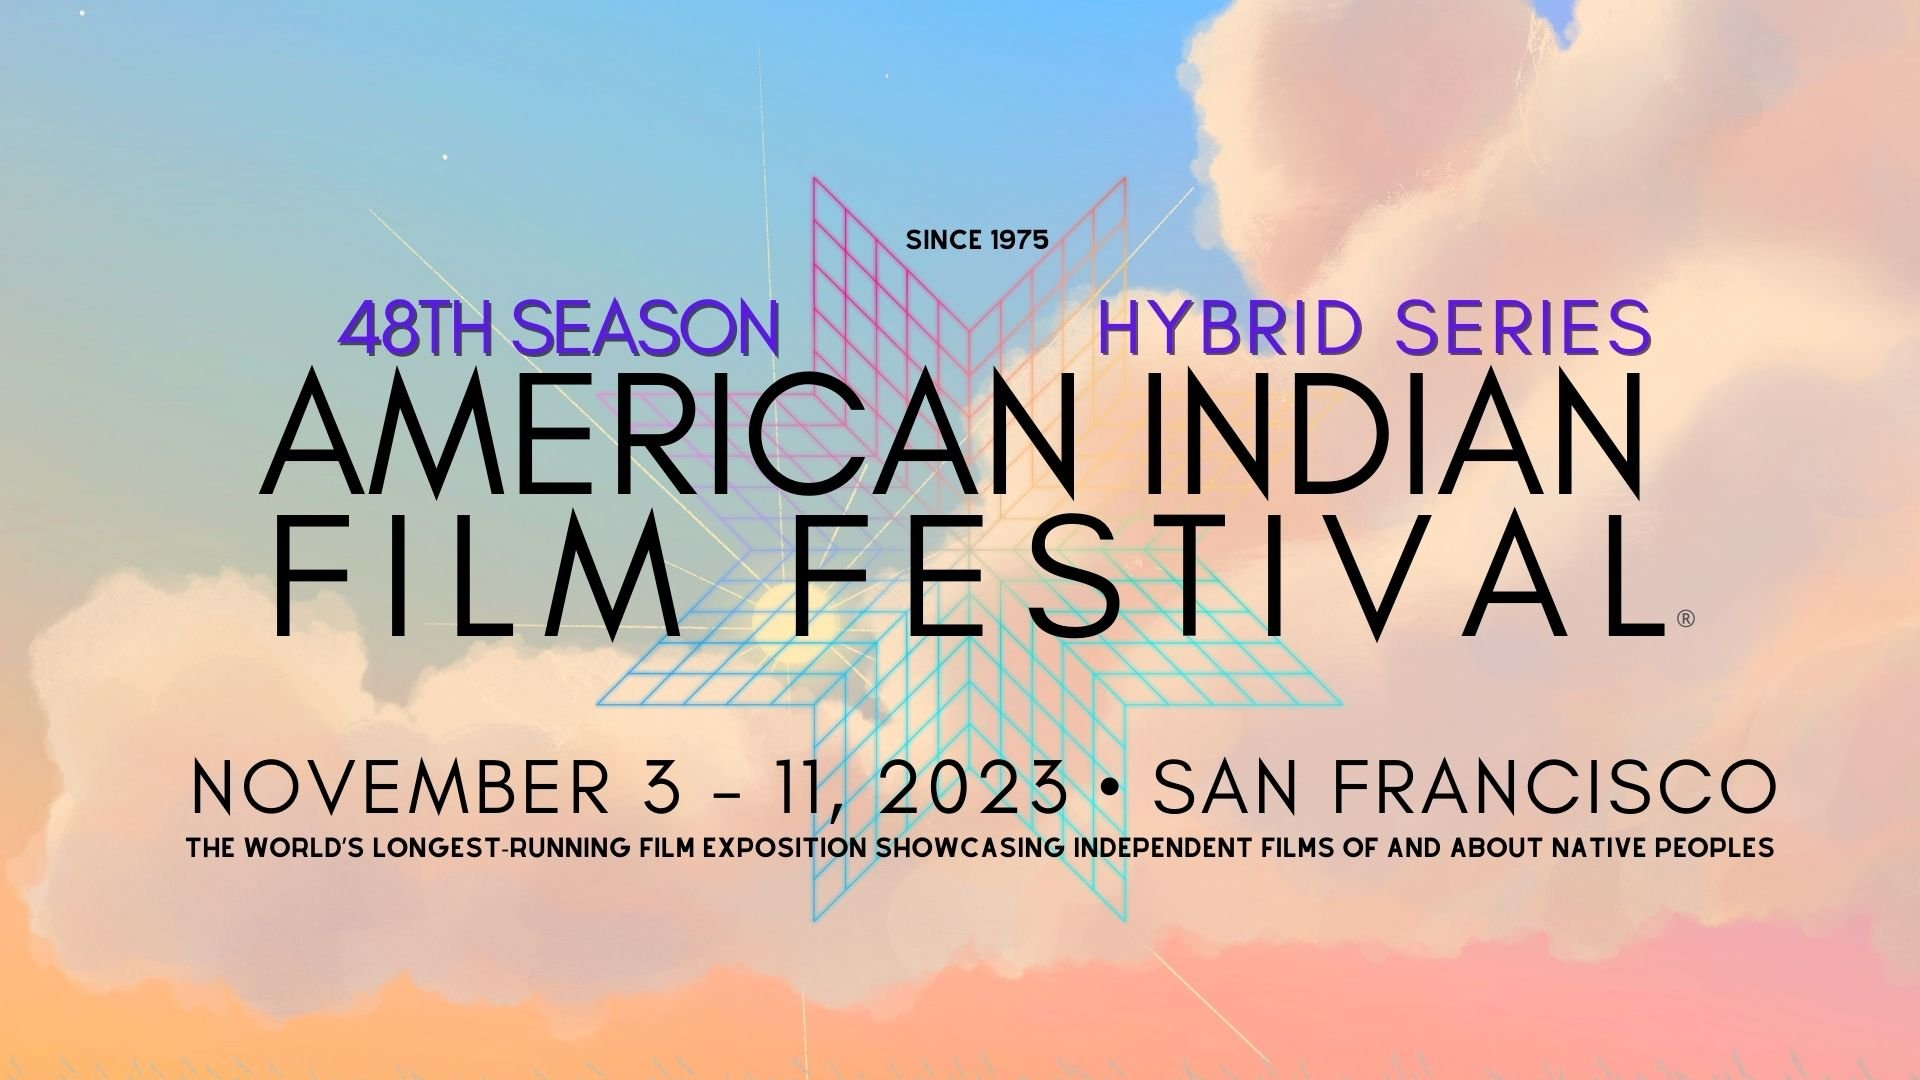 American Indian Film Festival: Awards, Winners List & More